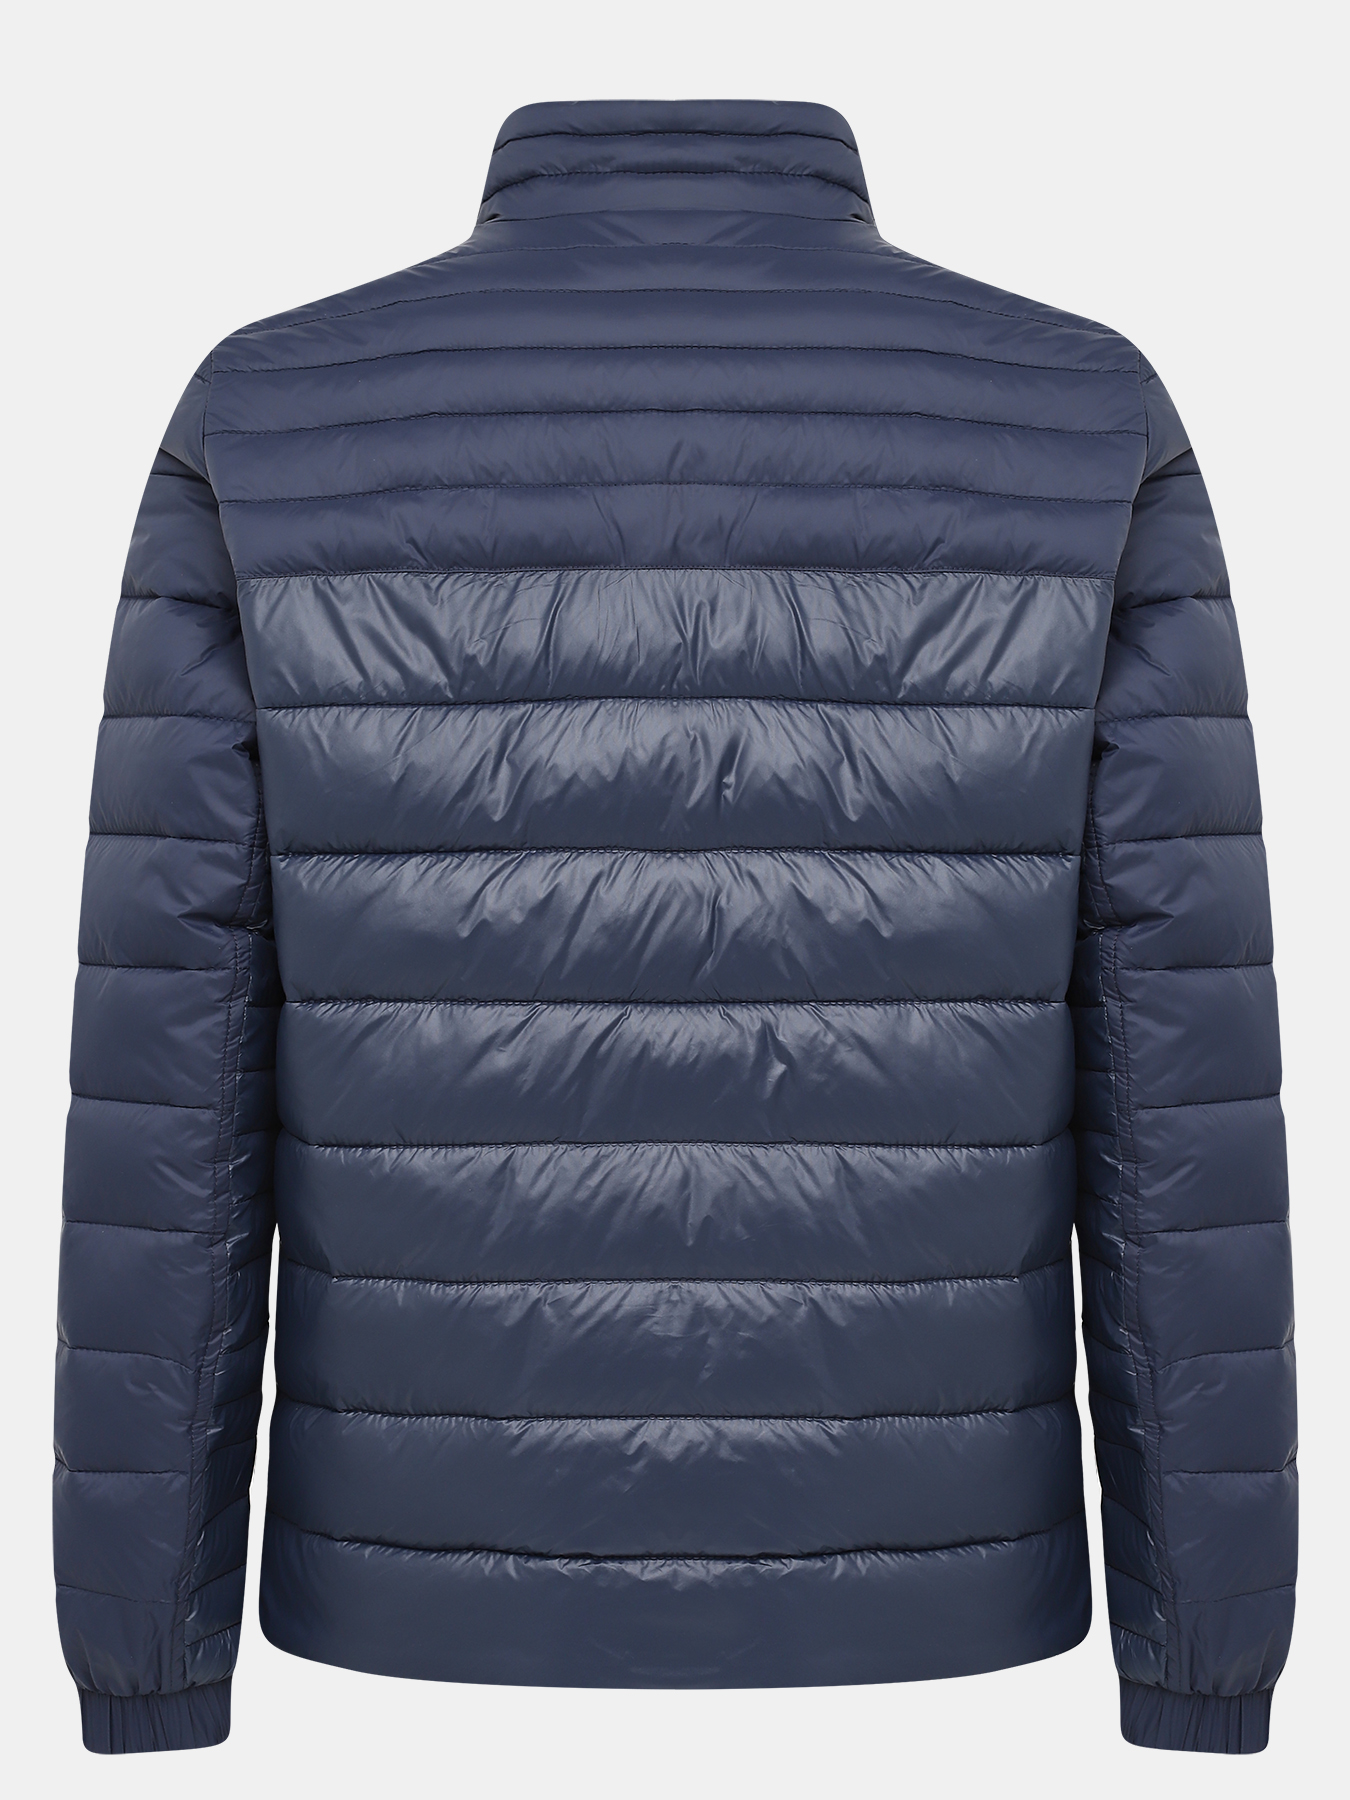 Куртка Oden BOSS 420447-028, цвет синий, размер 54 - фото 5